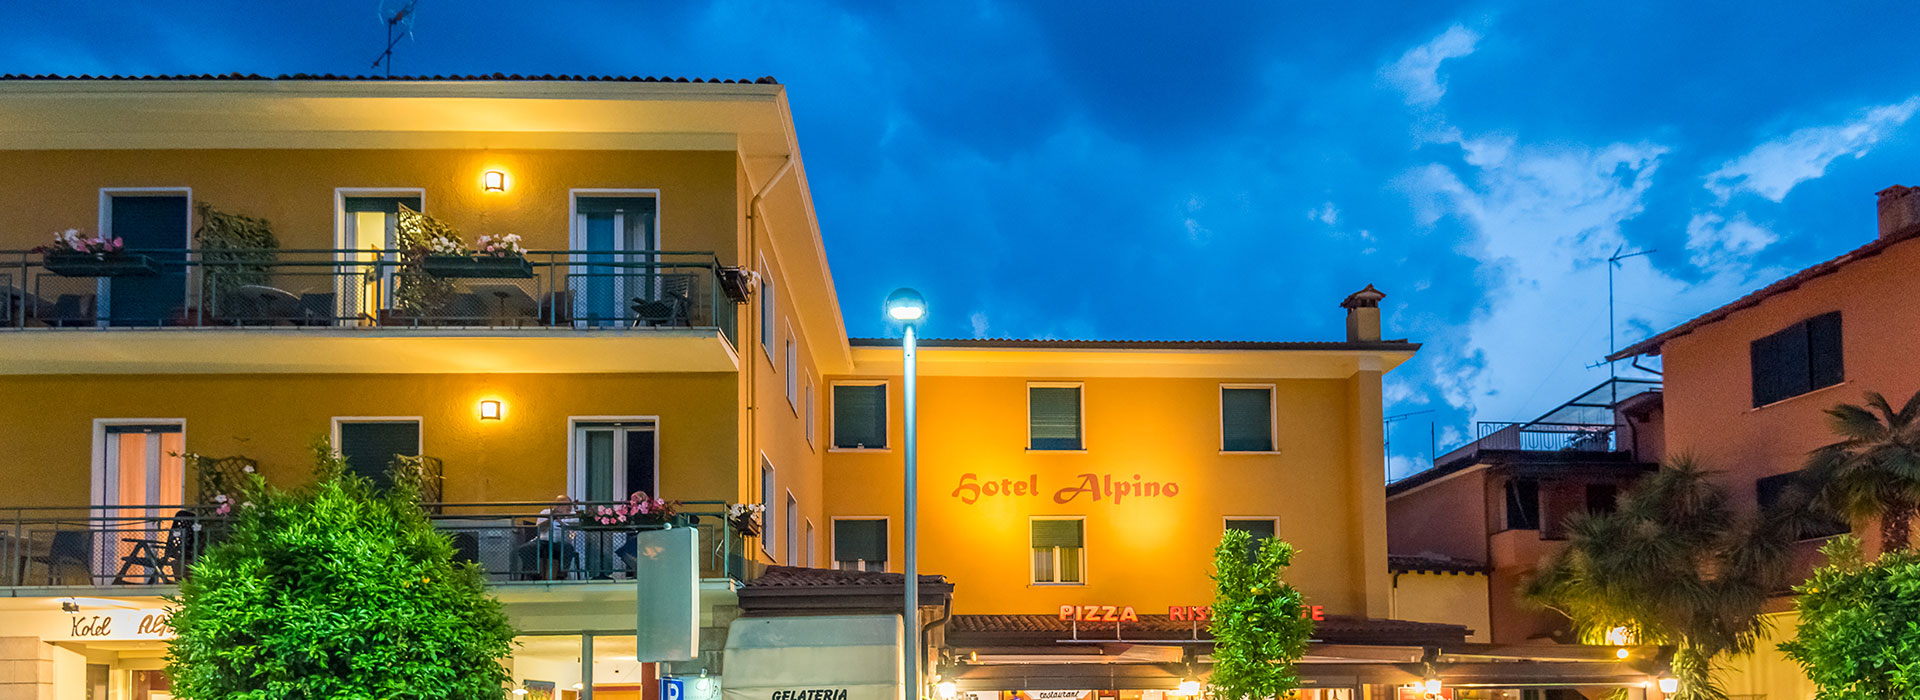 Hotel Alpino Malcesine – Contact us